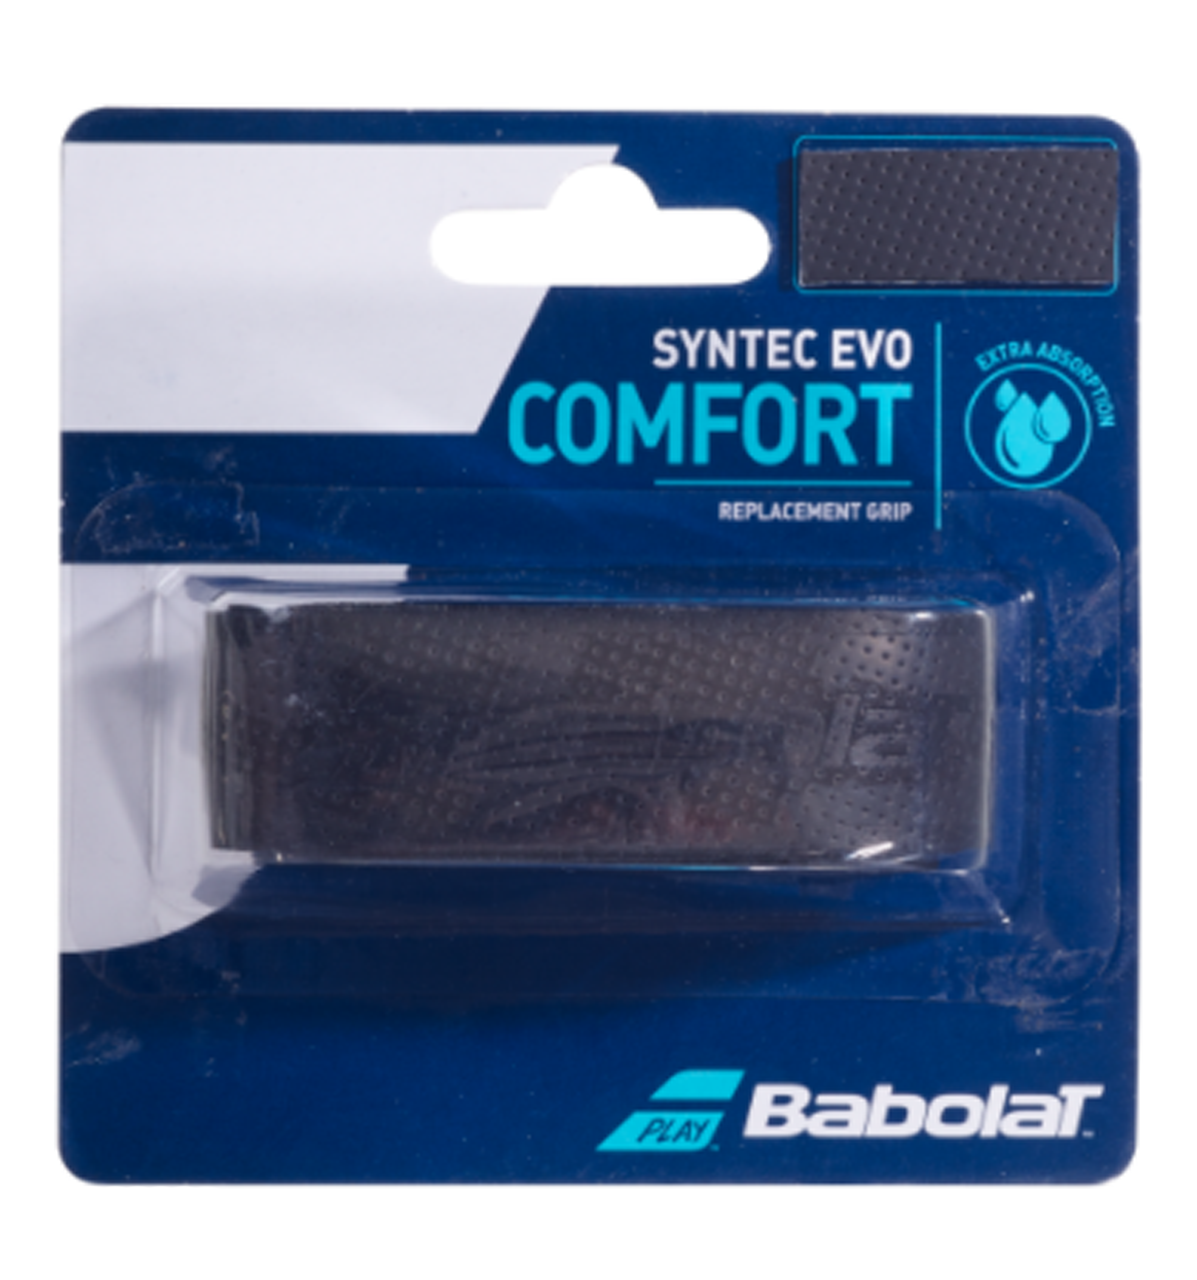 Tennis Griffband Syntec Evo Comfort